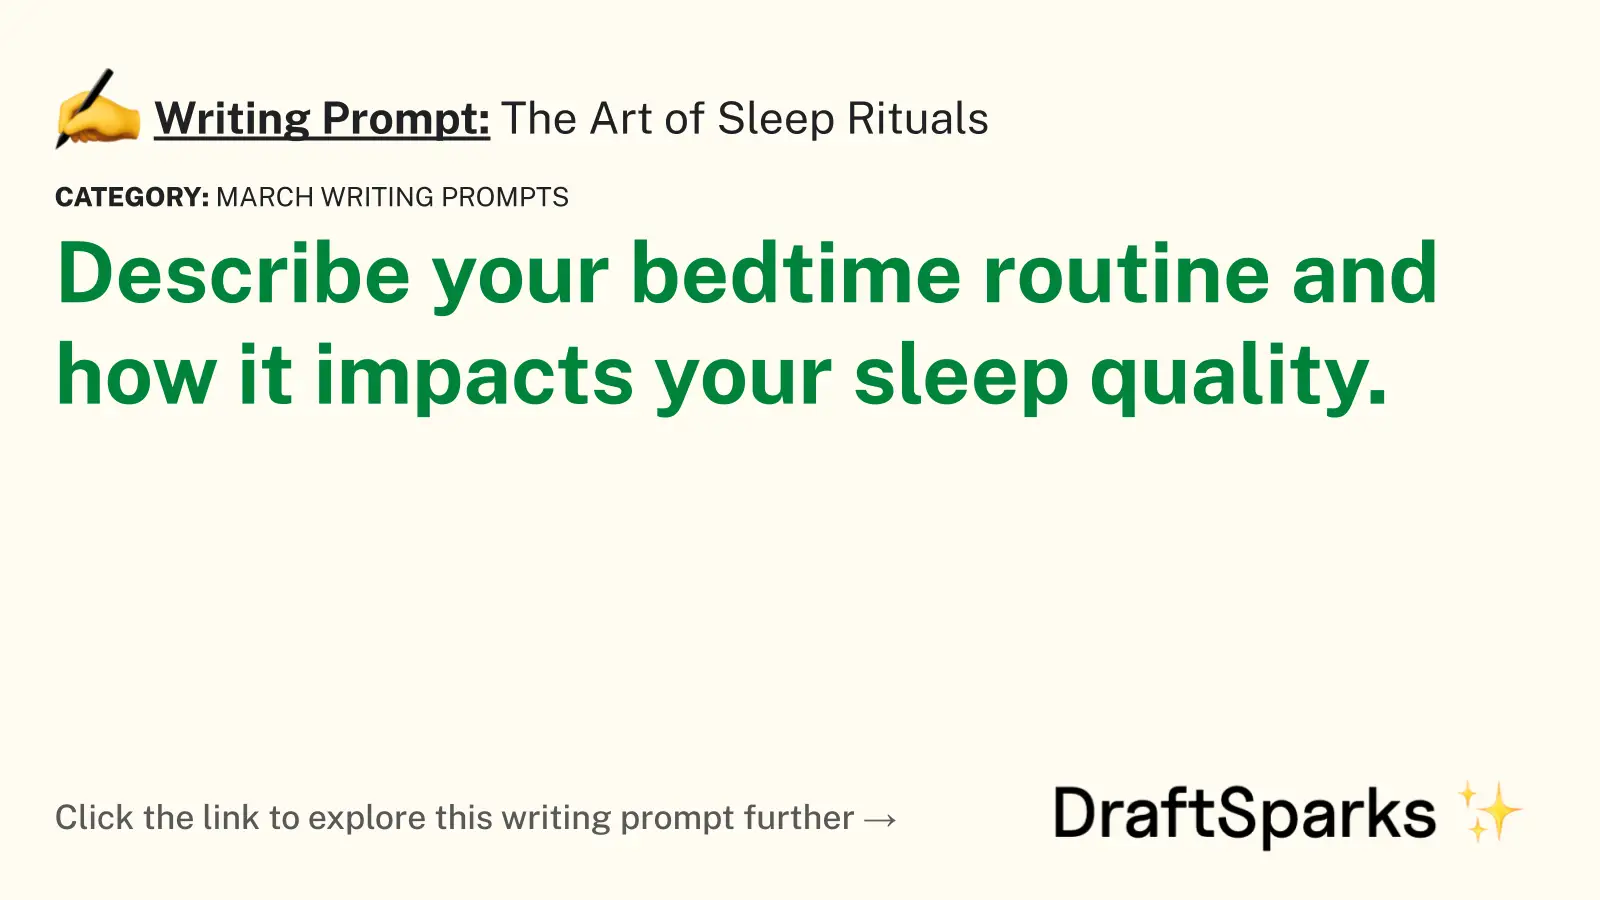 The Art of Sleep Rituals